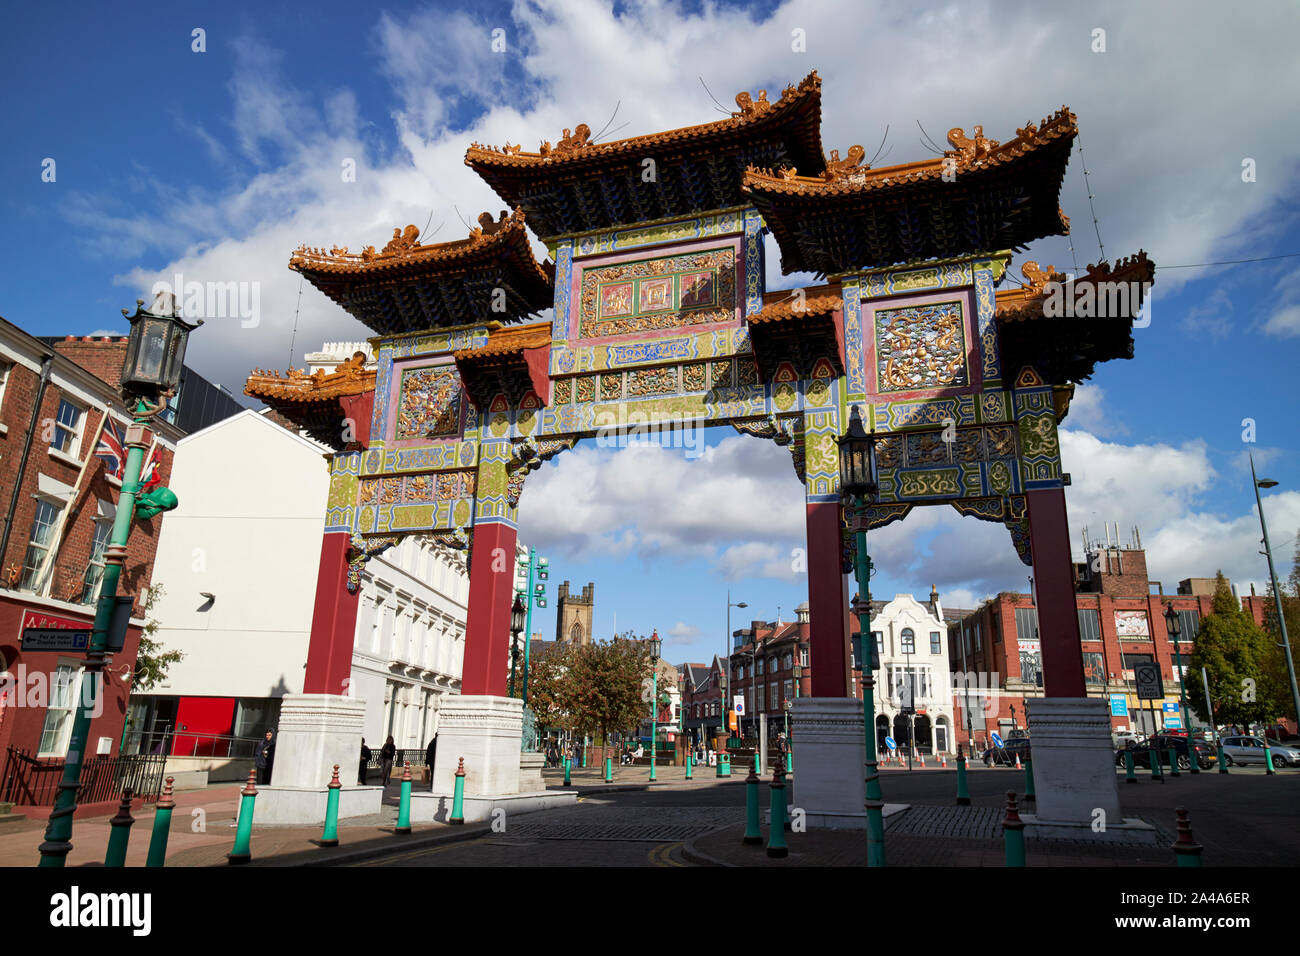 Arco chino Chinatown Gate Liverpool Inglaterra Foto de stock